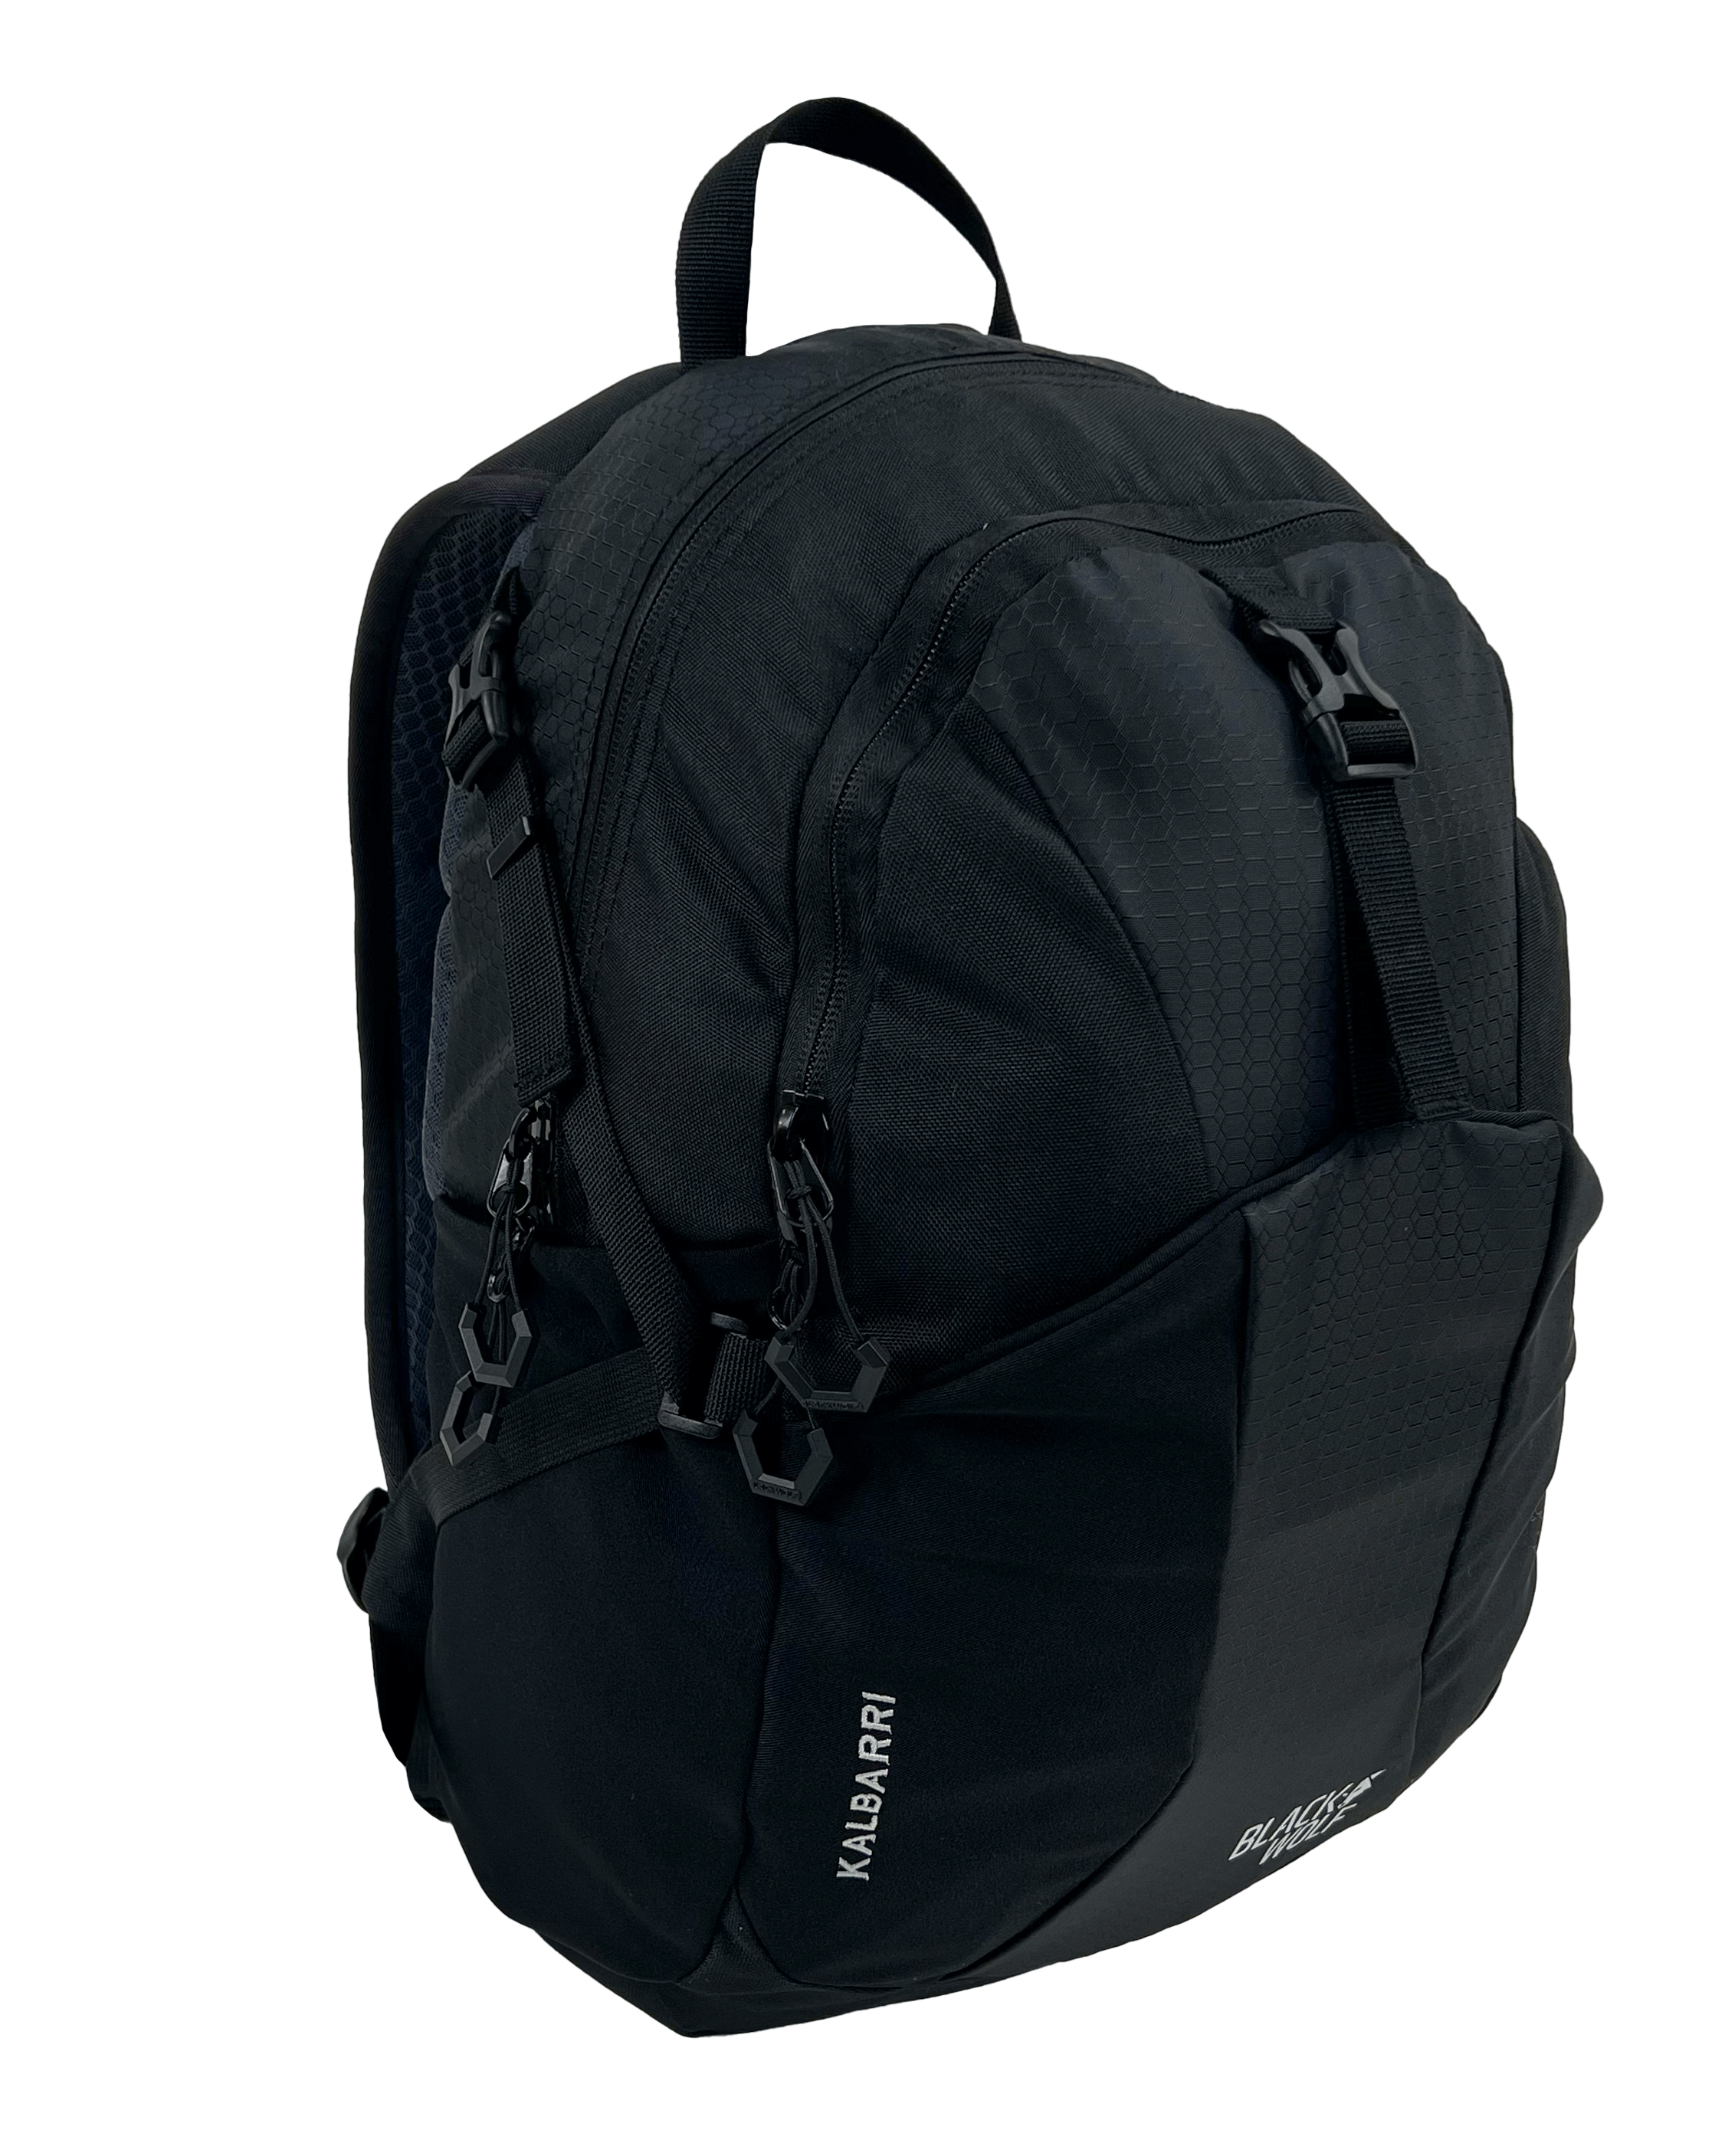 Black Wolf - Kalbarri 20L Backpack - Jet Black-1